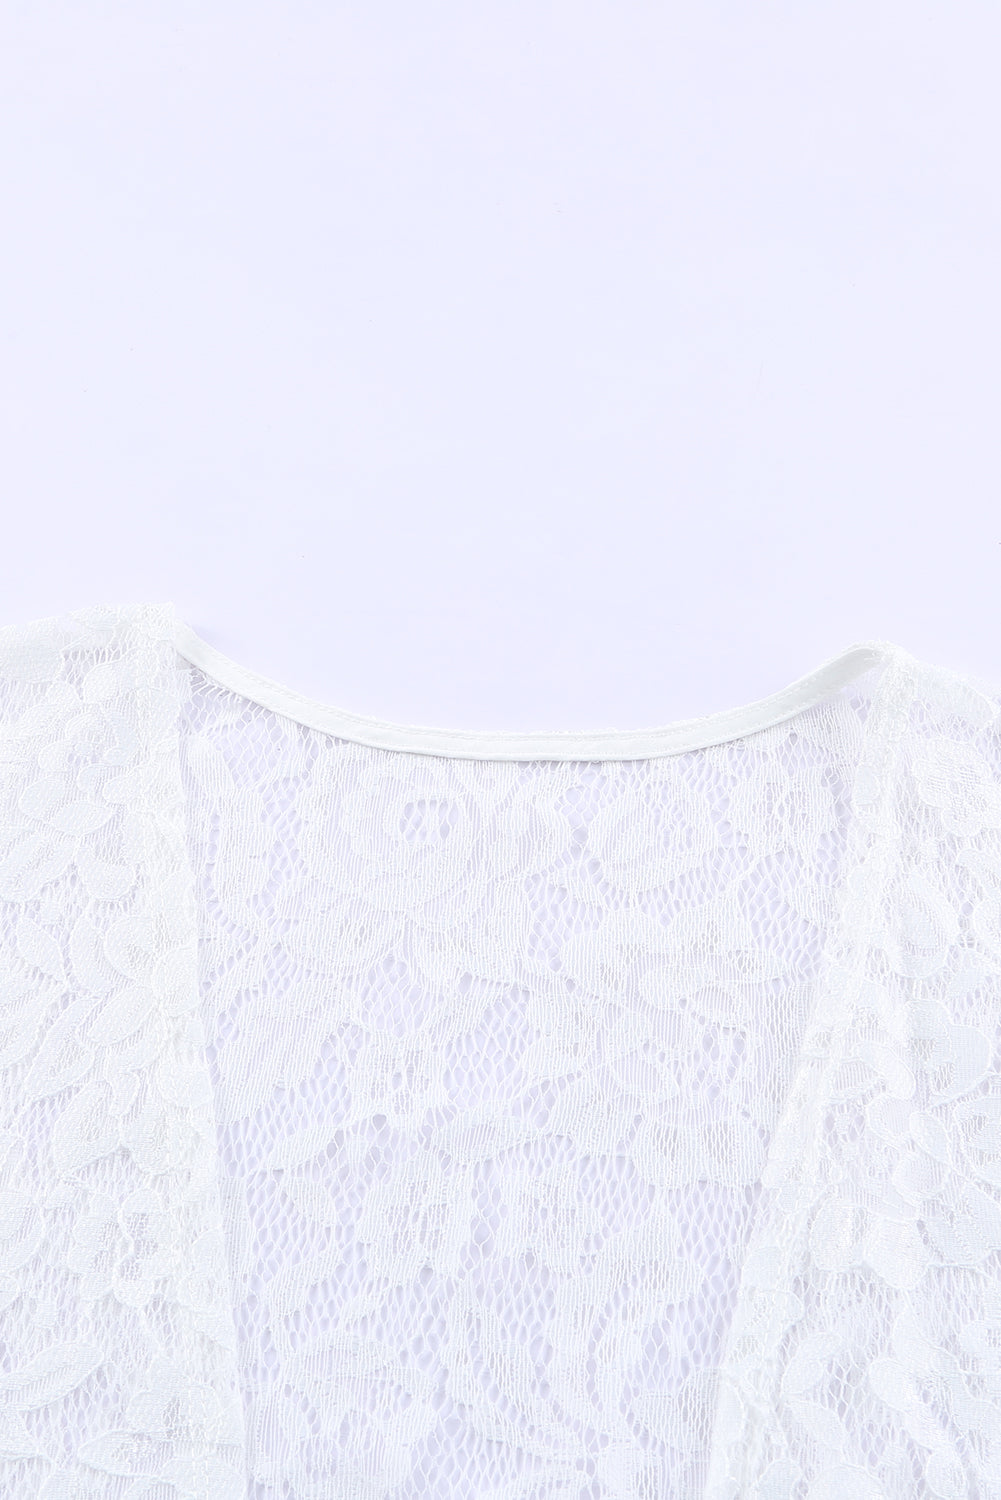 White Floral Lace Crochet Short Sleeve Open Front Kimono